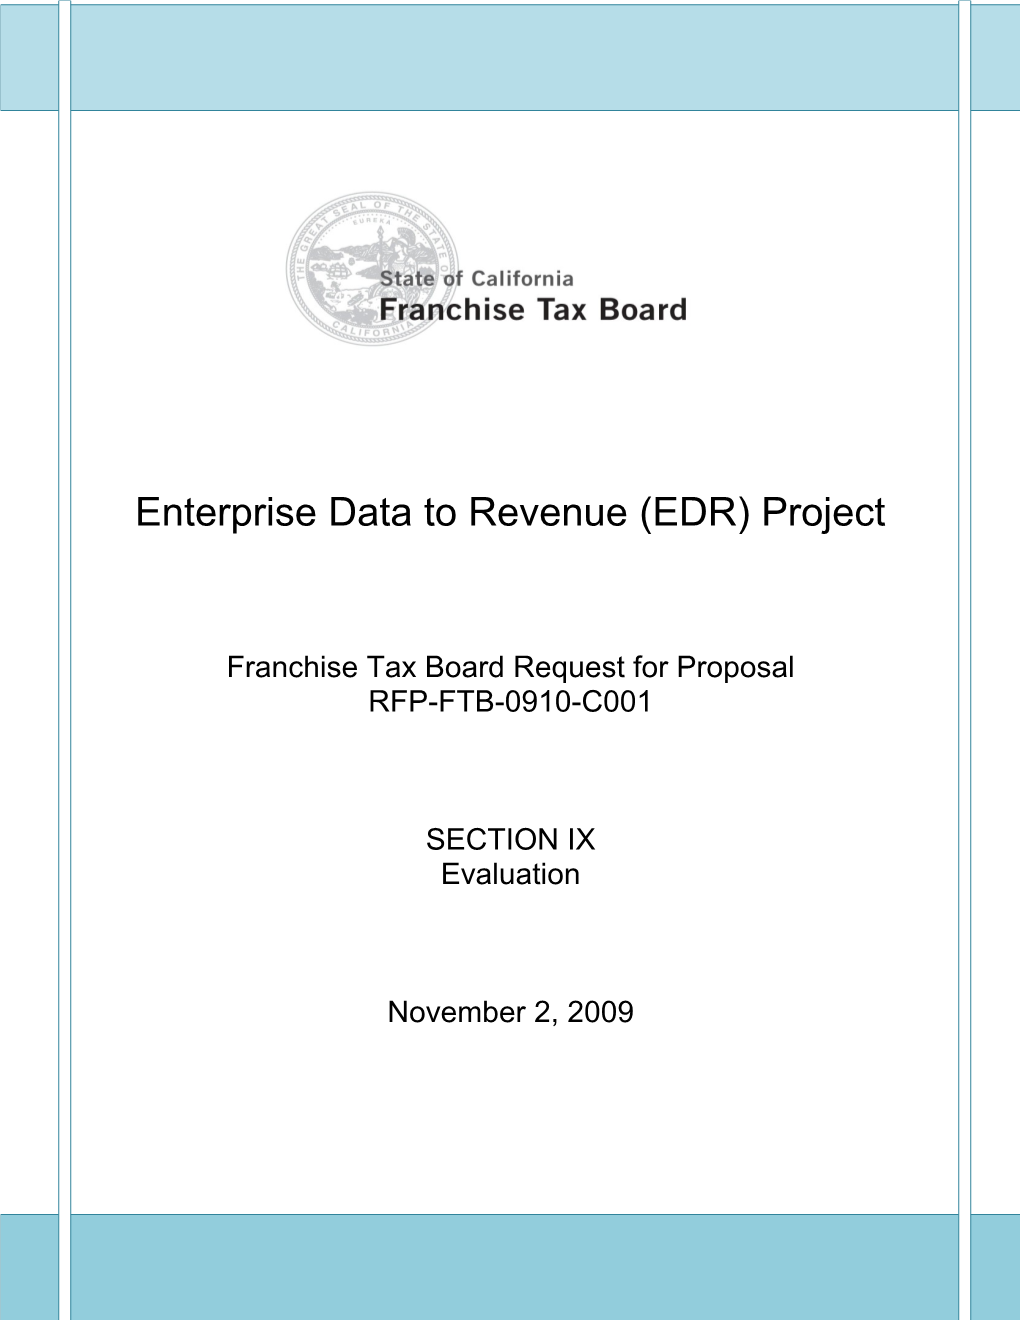 EDR Project RFP-FTB-0910-C001 11/02/09